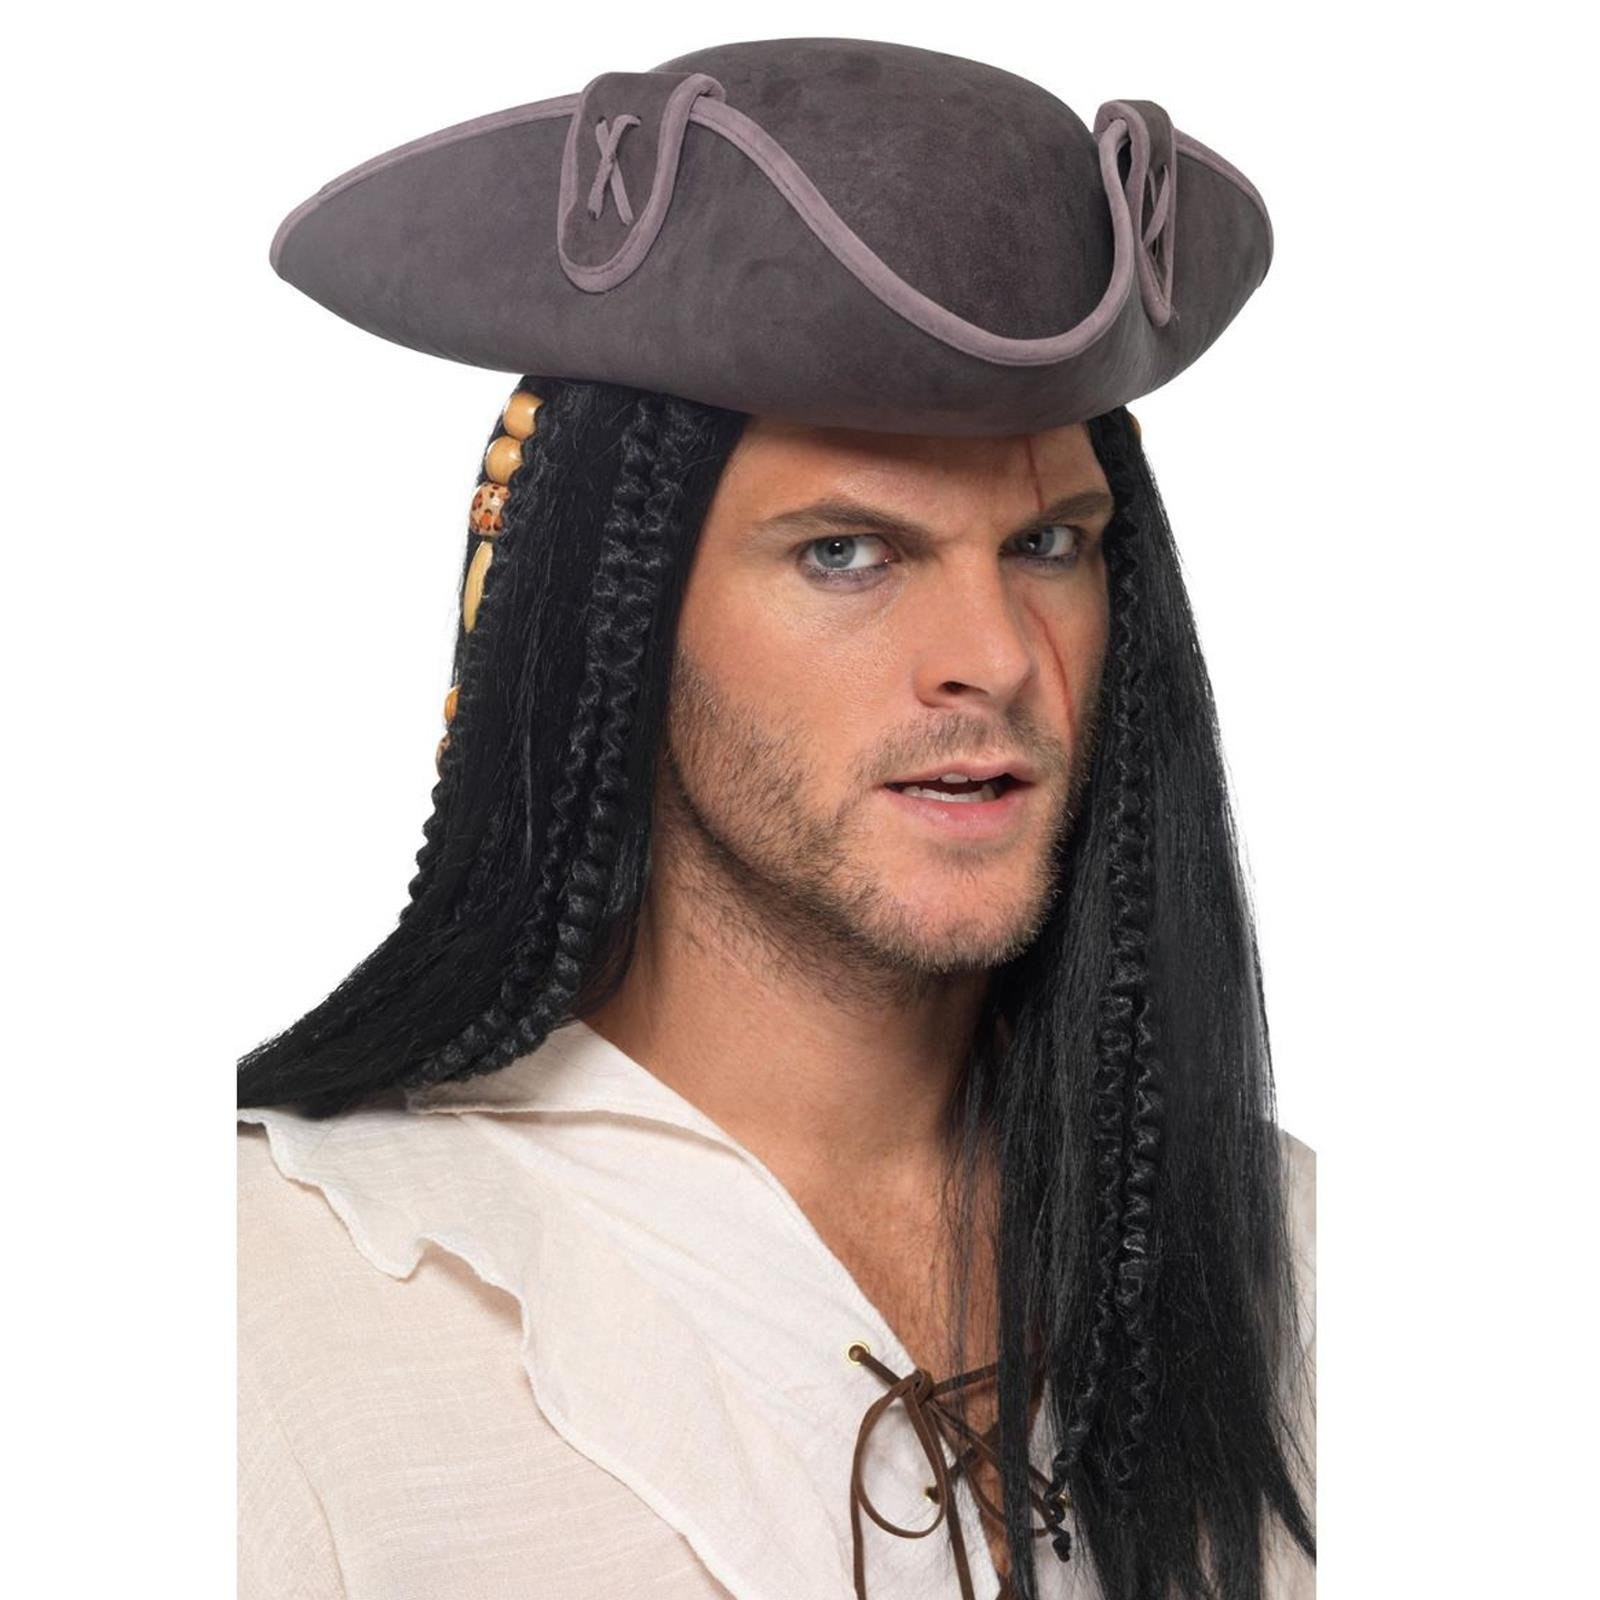 Джек шляпа. Шляпа капитана Джека воробья. Шляпа треуголка капитана Джека воробья. Капитанская треуголка пирата. Капитанская треуголка Джека воробья.